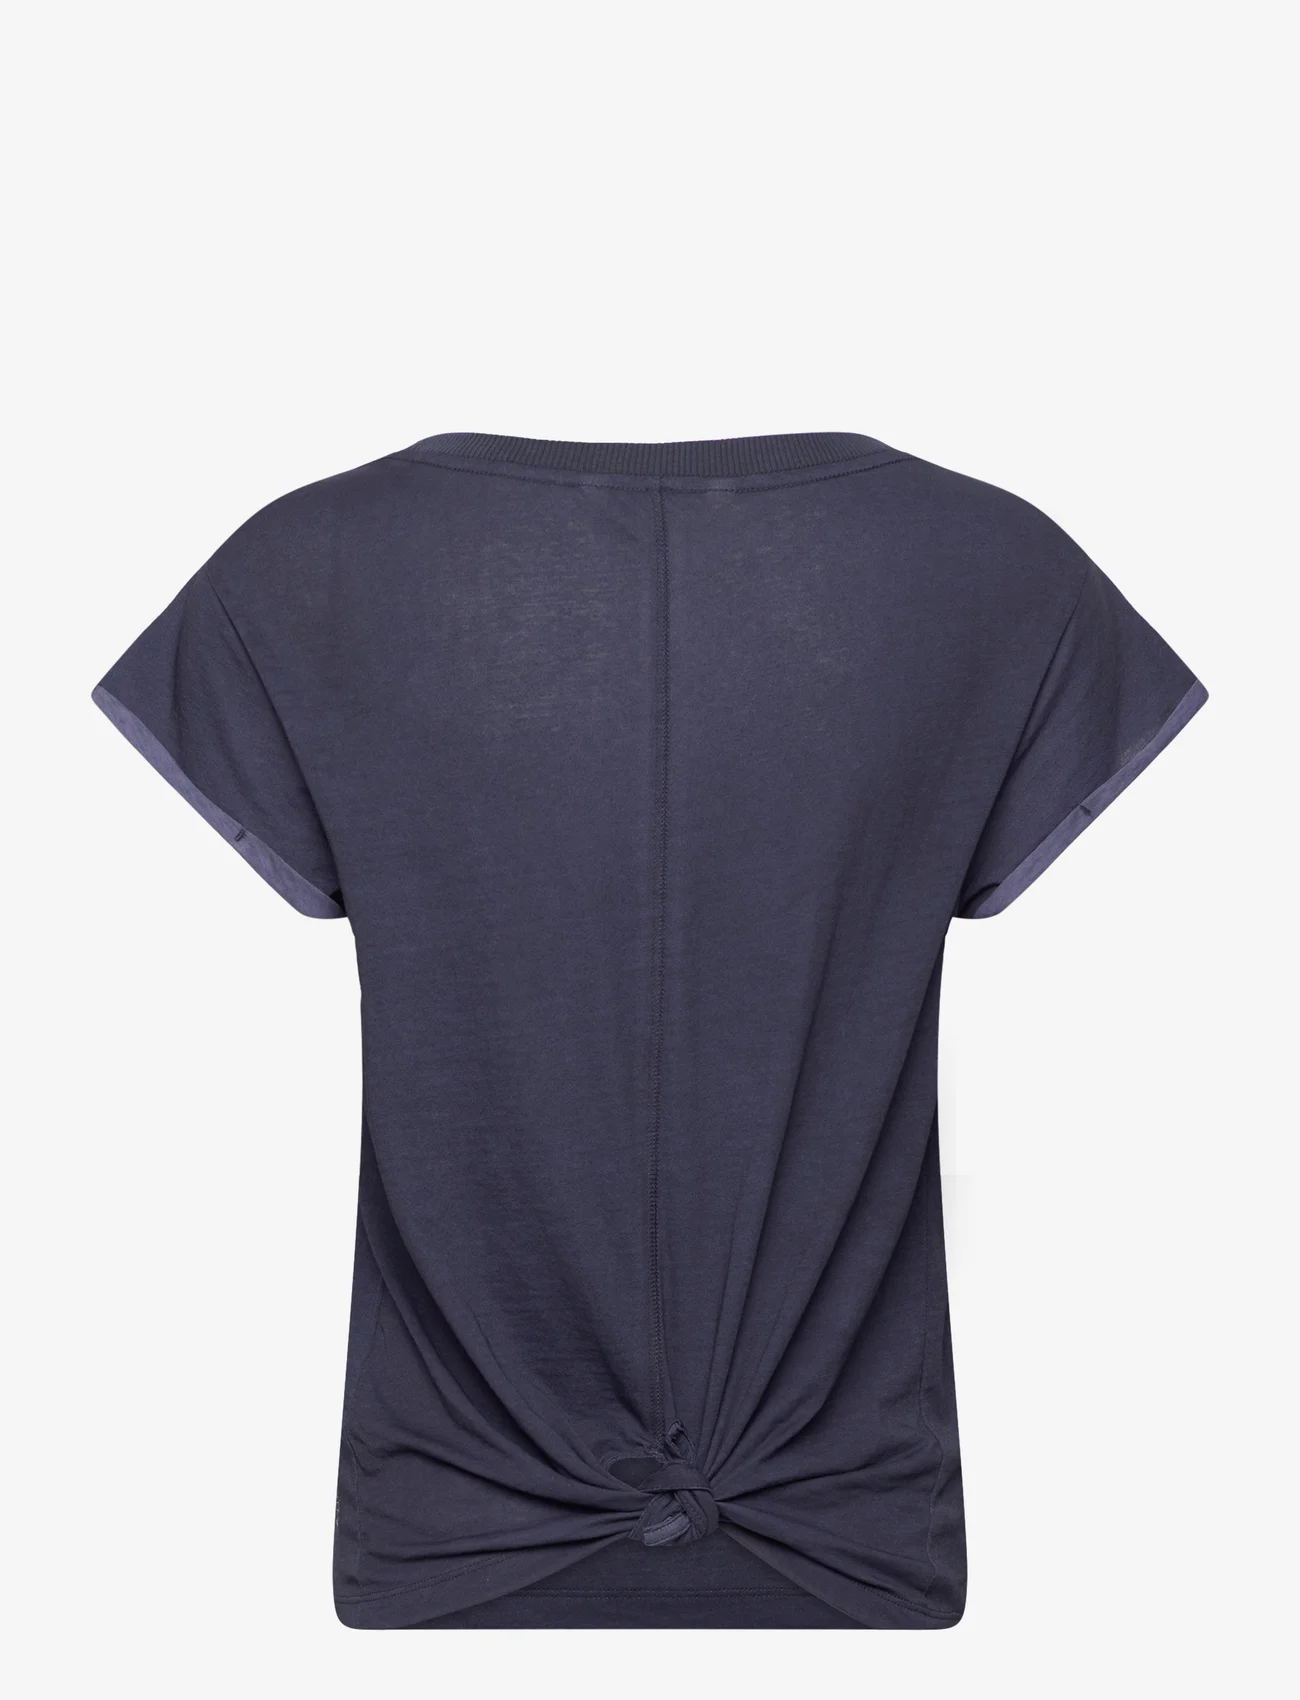 ODD MOLLY - Freya Top - t-shirts & tops - dark blue - 1